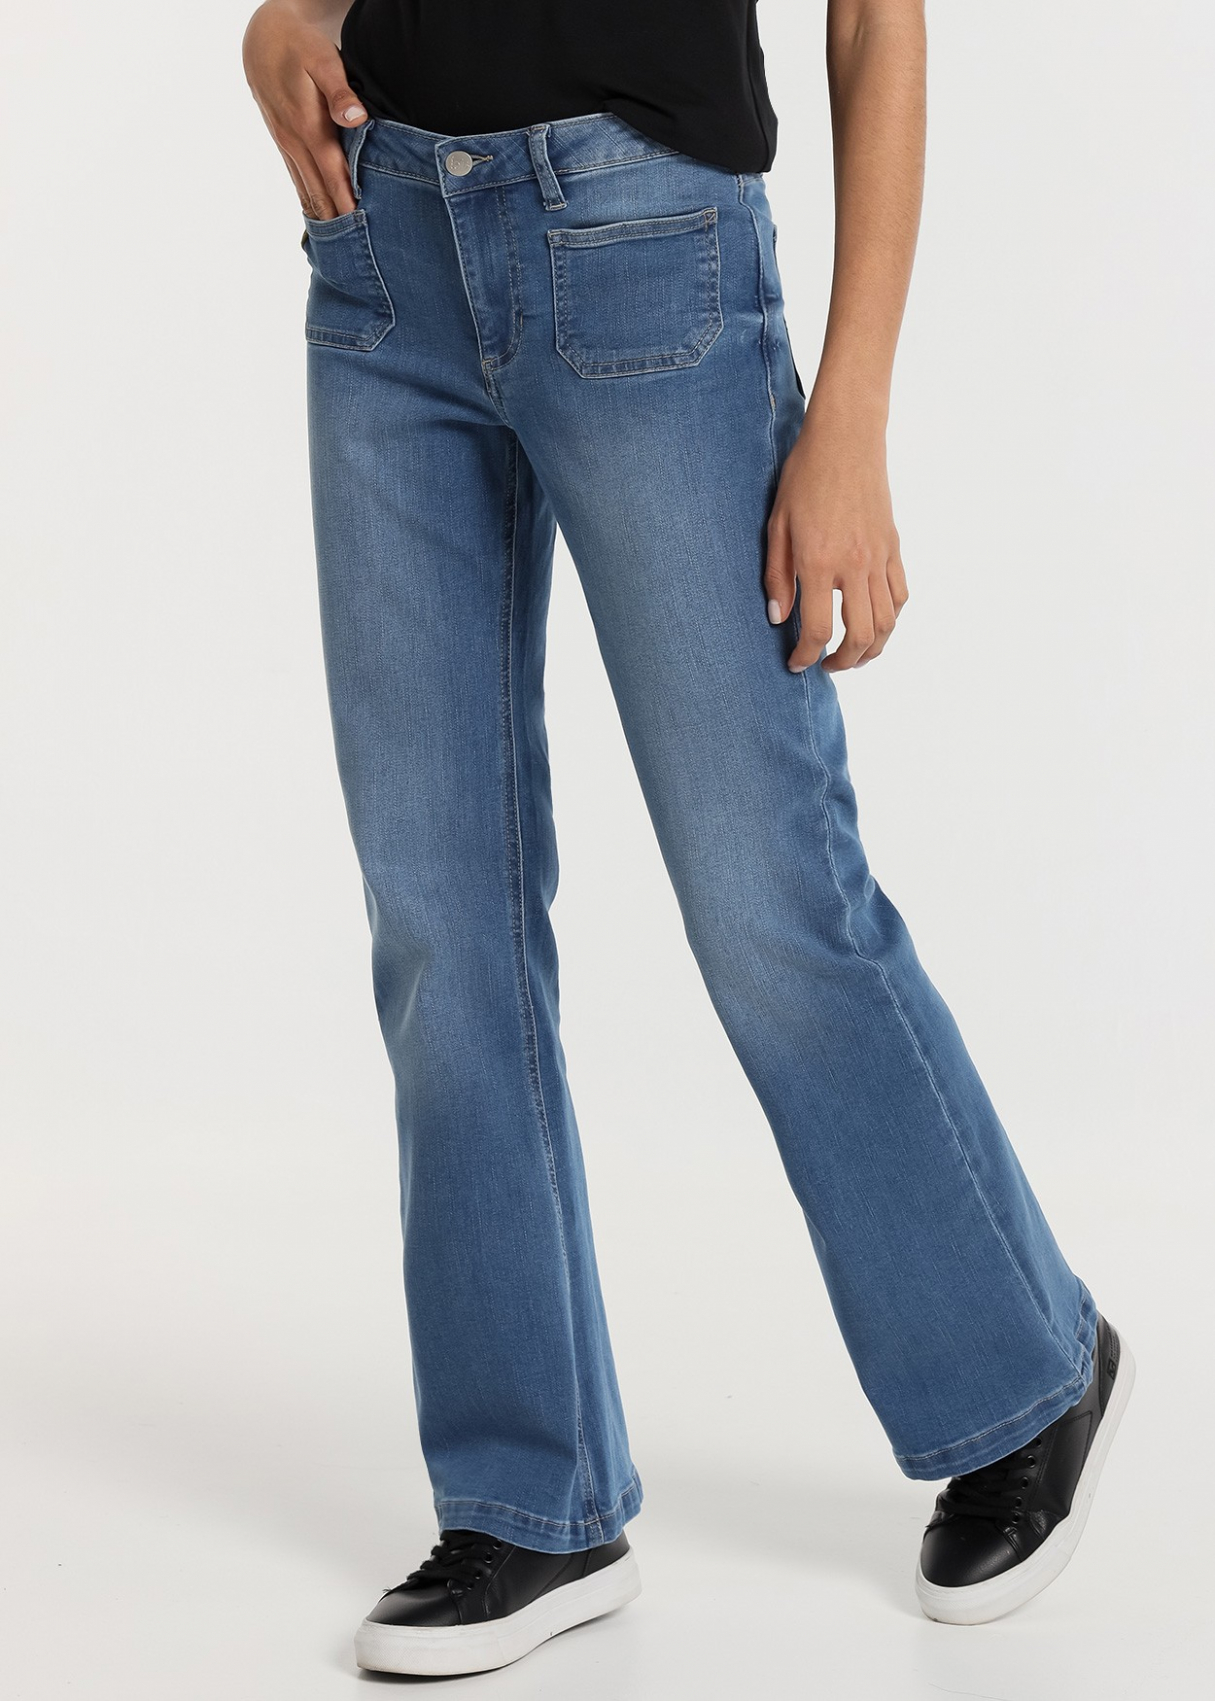 Jeans straight boot - Taille basse towel Denim |Tailles en pouces